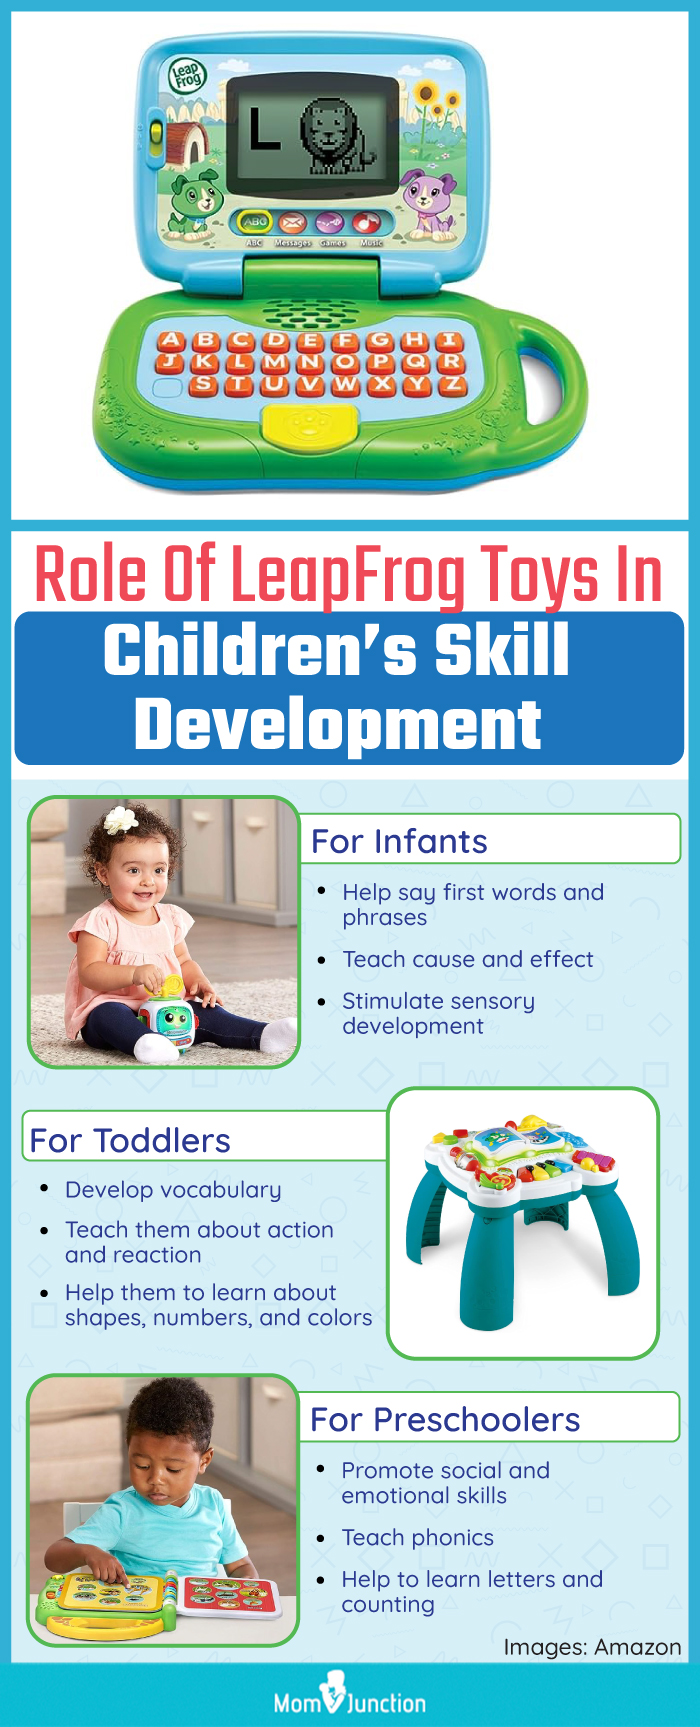 Role Of LeapFrog Toys In Children’s Skill Development (infographic)